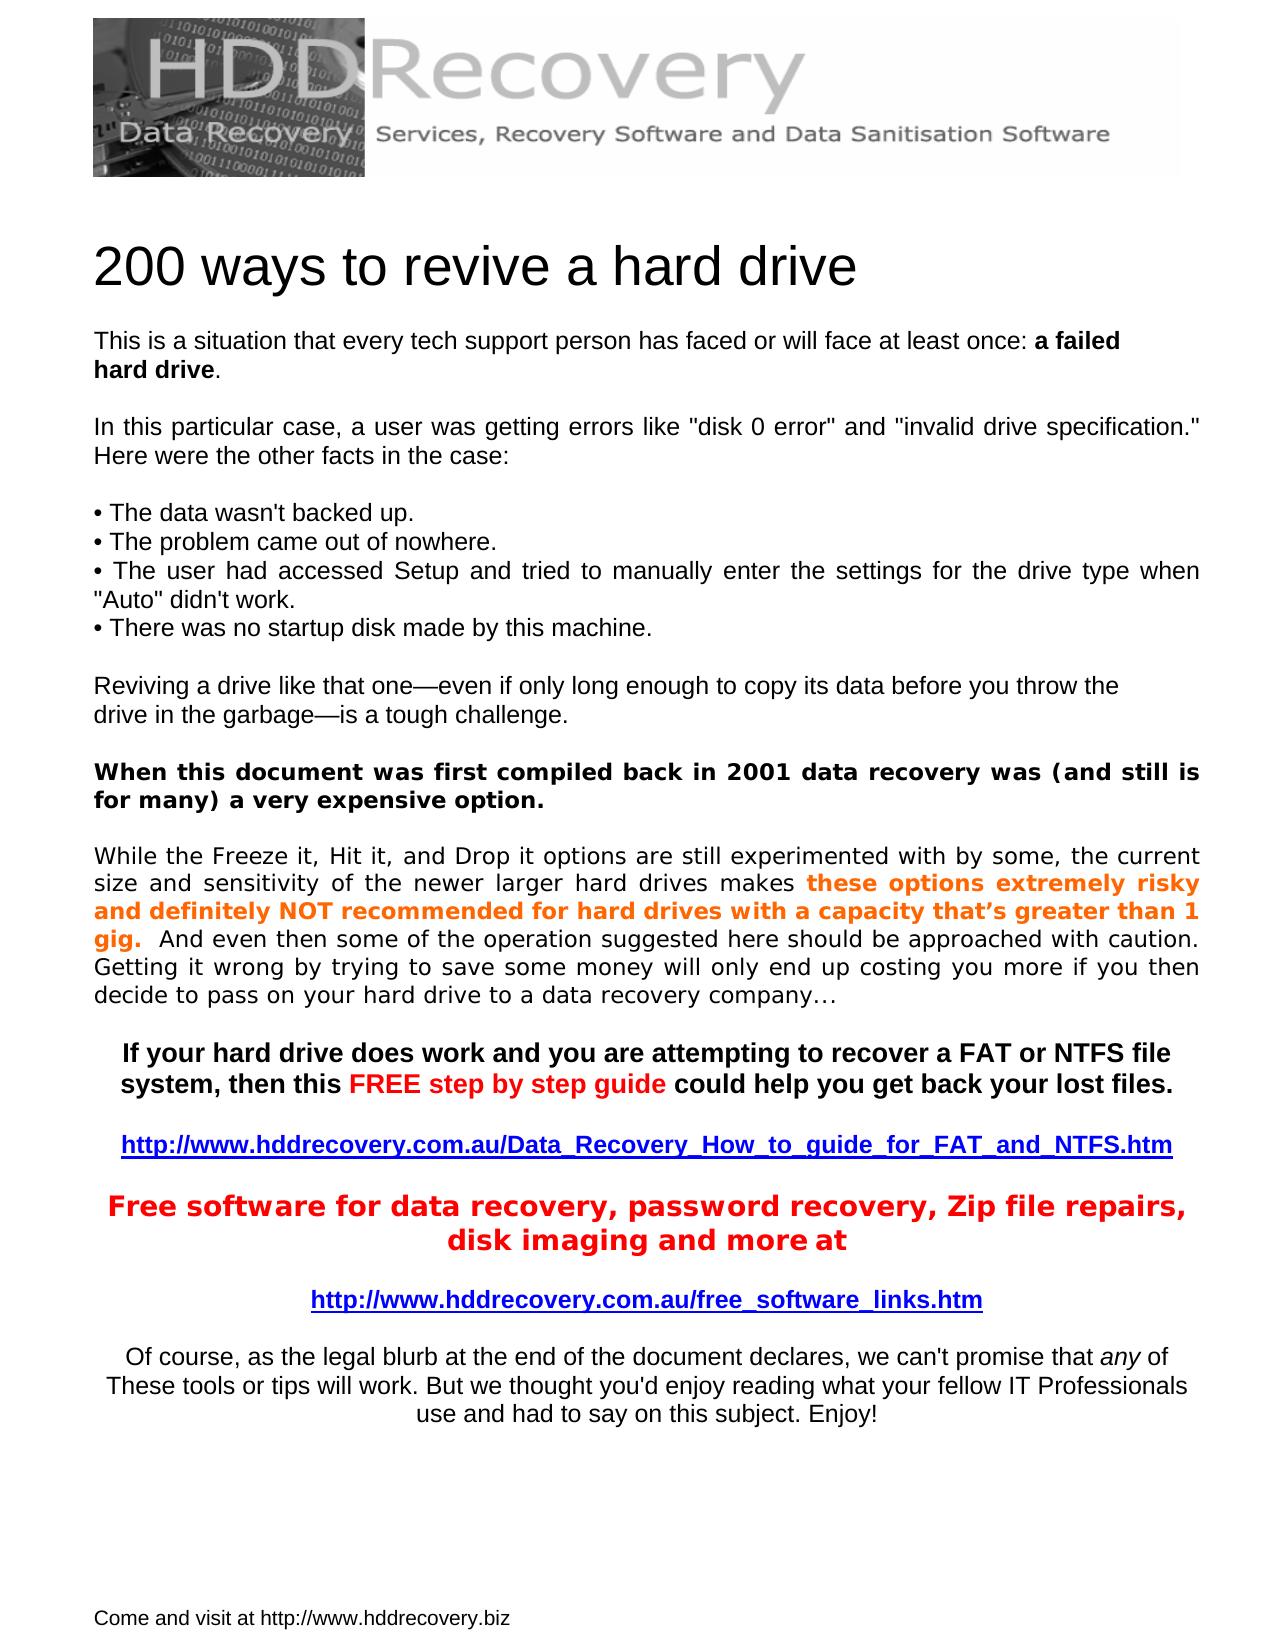 Microsoft Word - 200 ways.doc